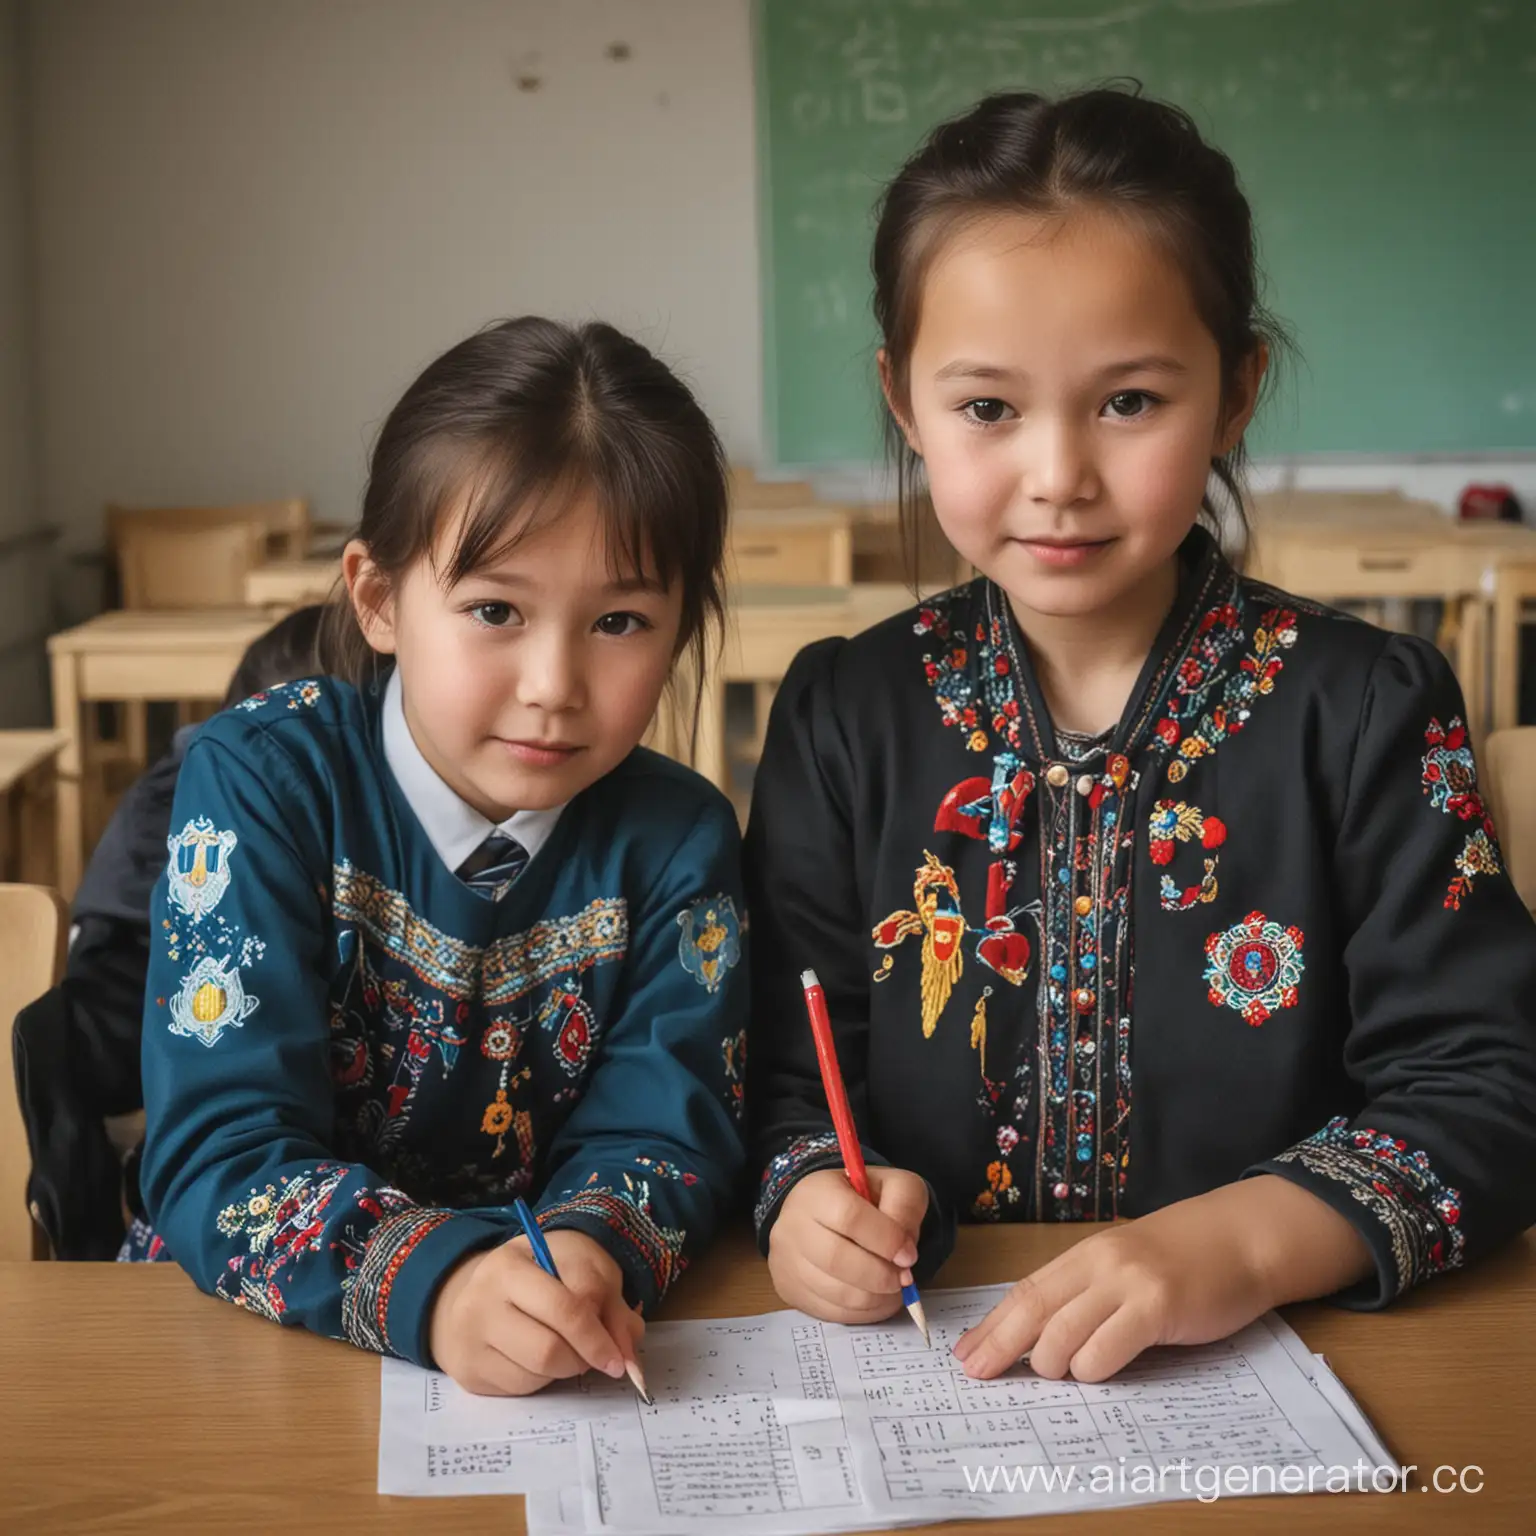 Kazakhstan-Schoolchildren-Making-a-Decision